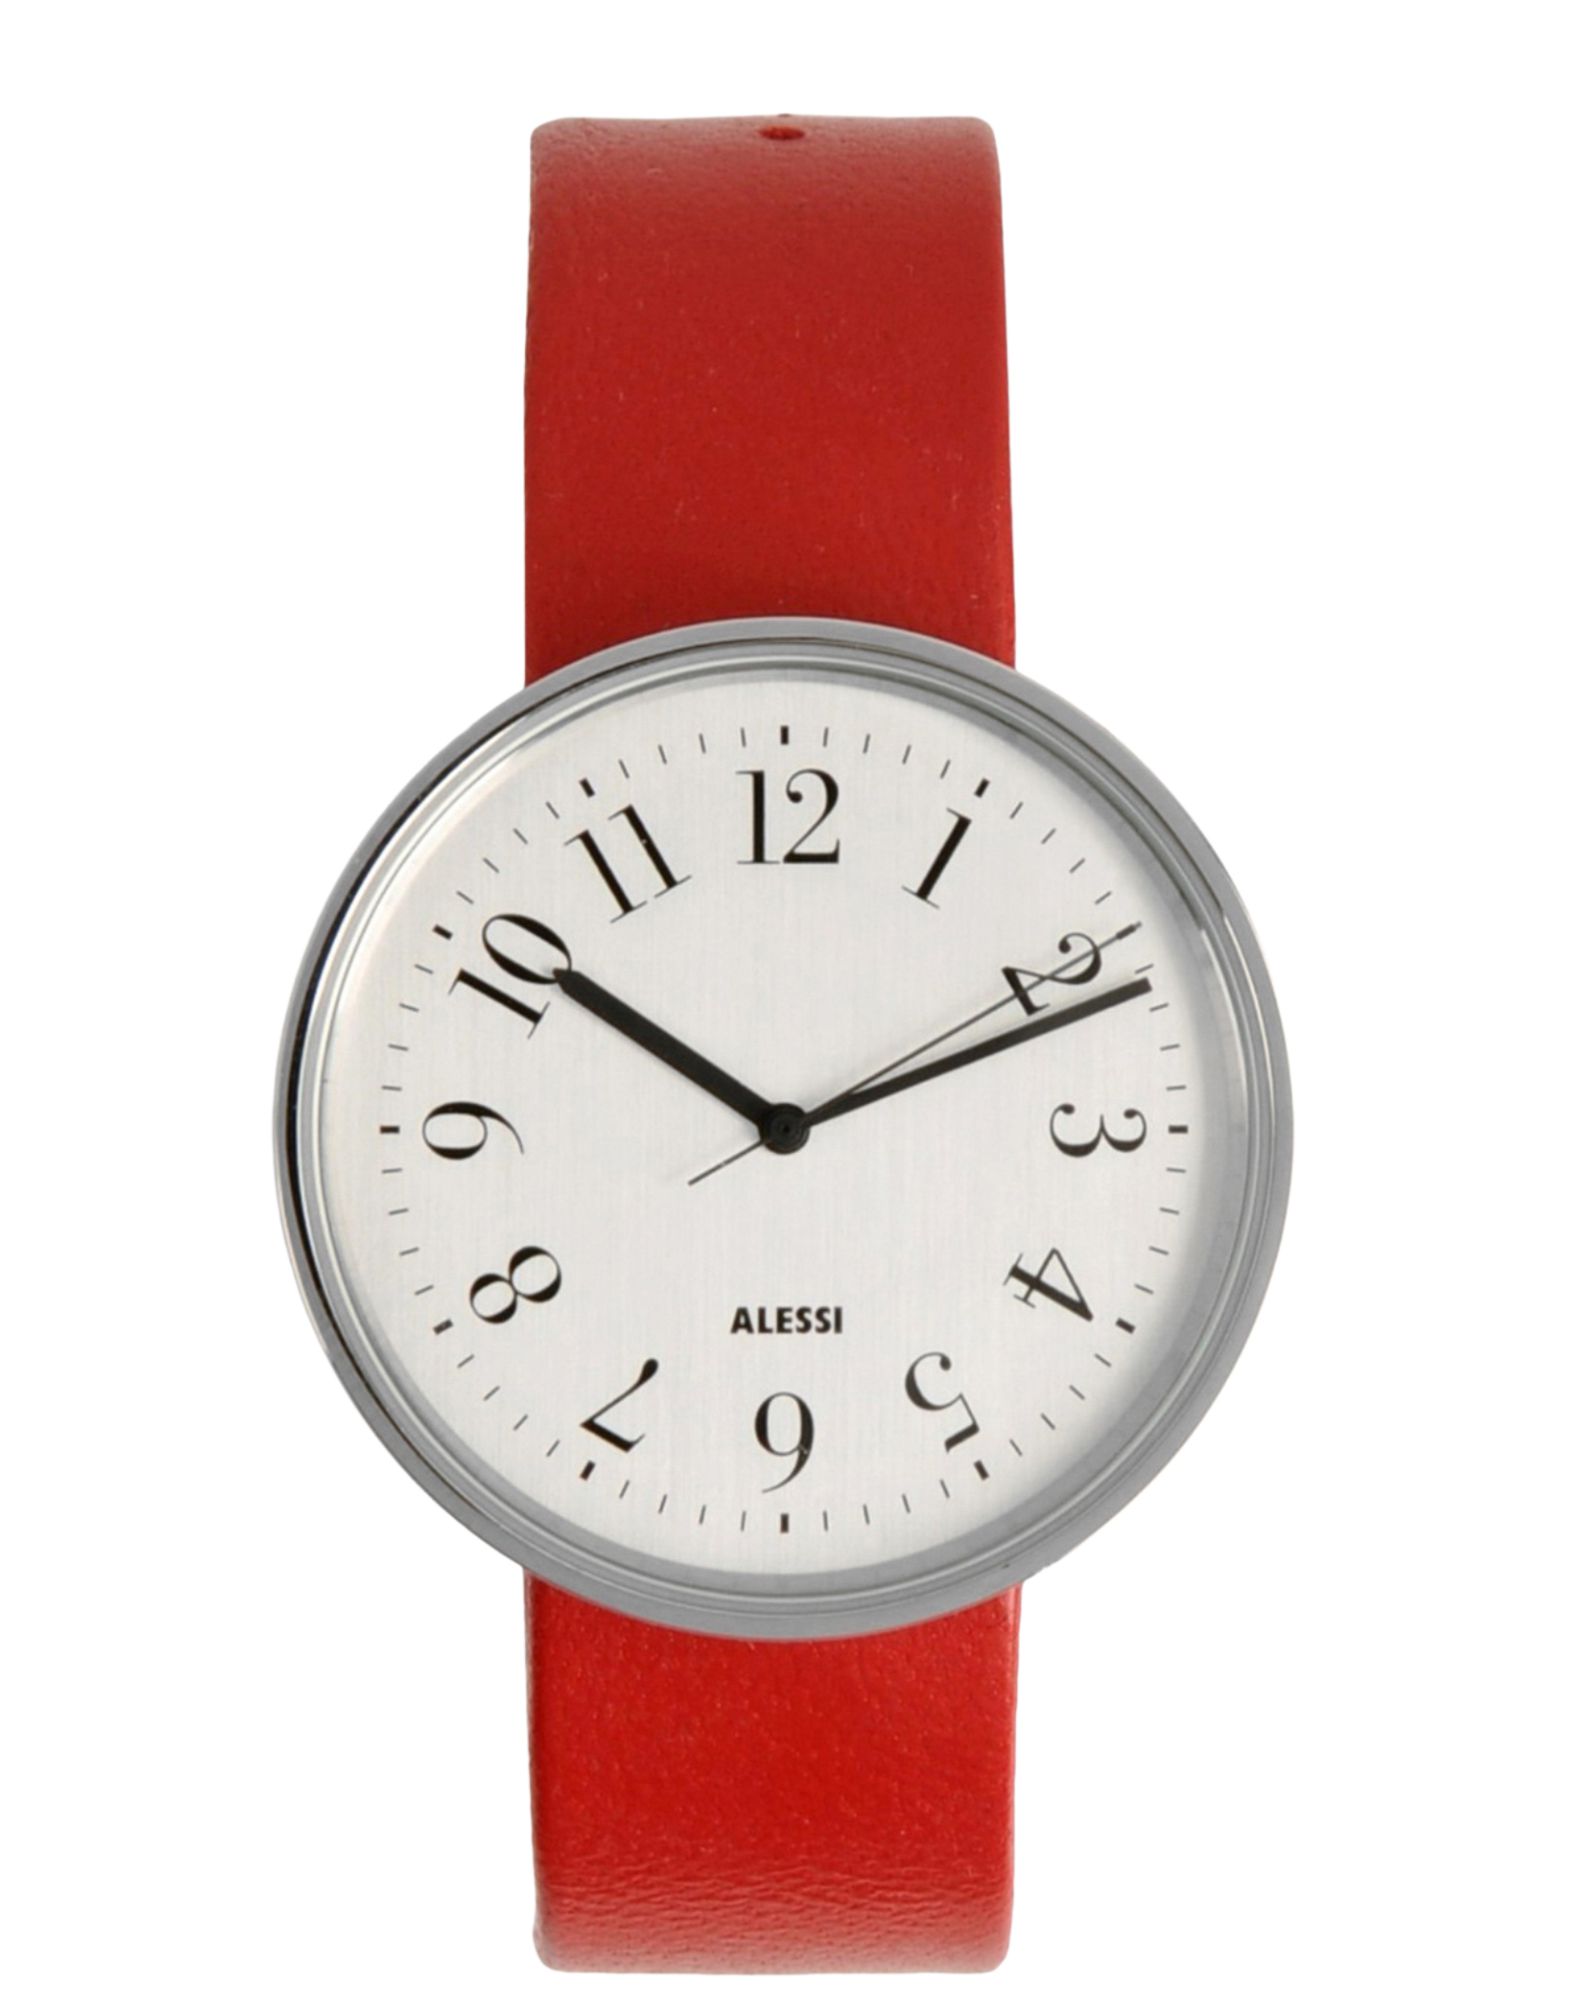 Foto alessi relojes de pulsera Rojo